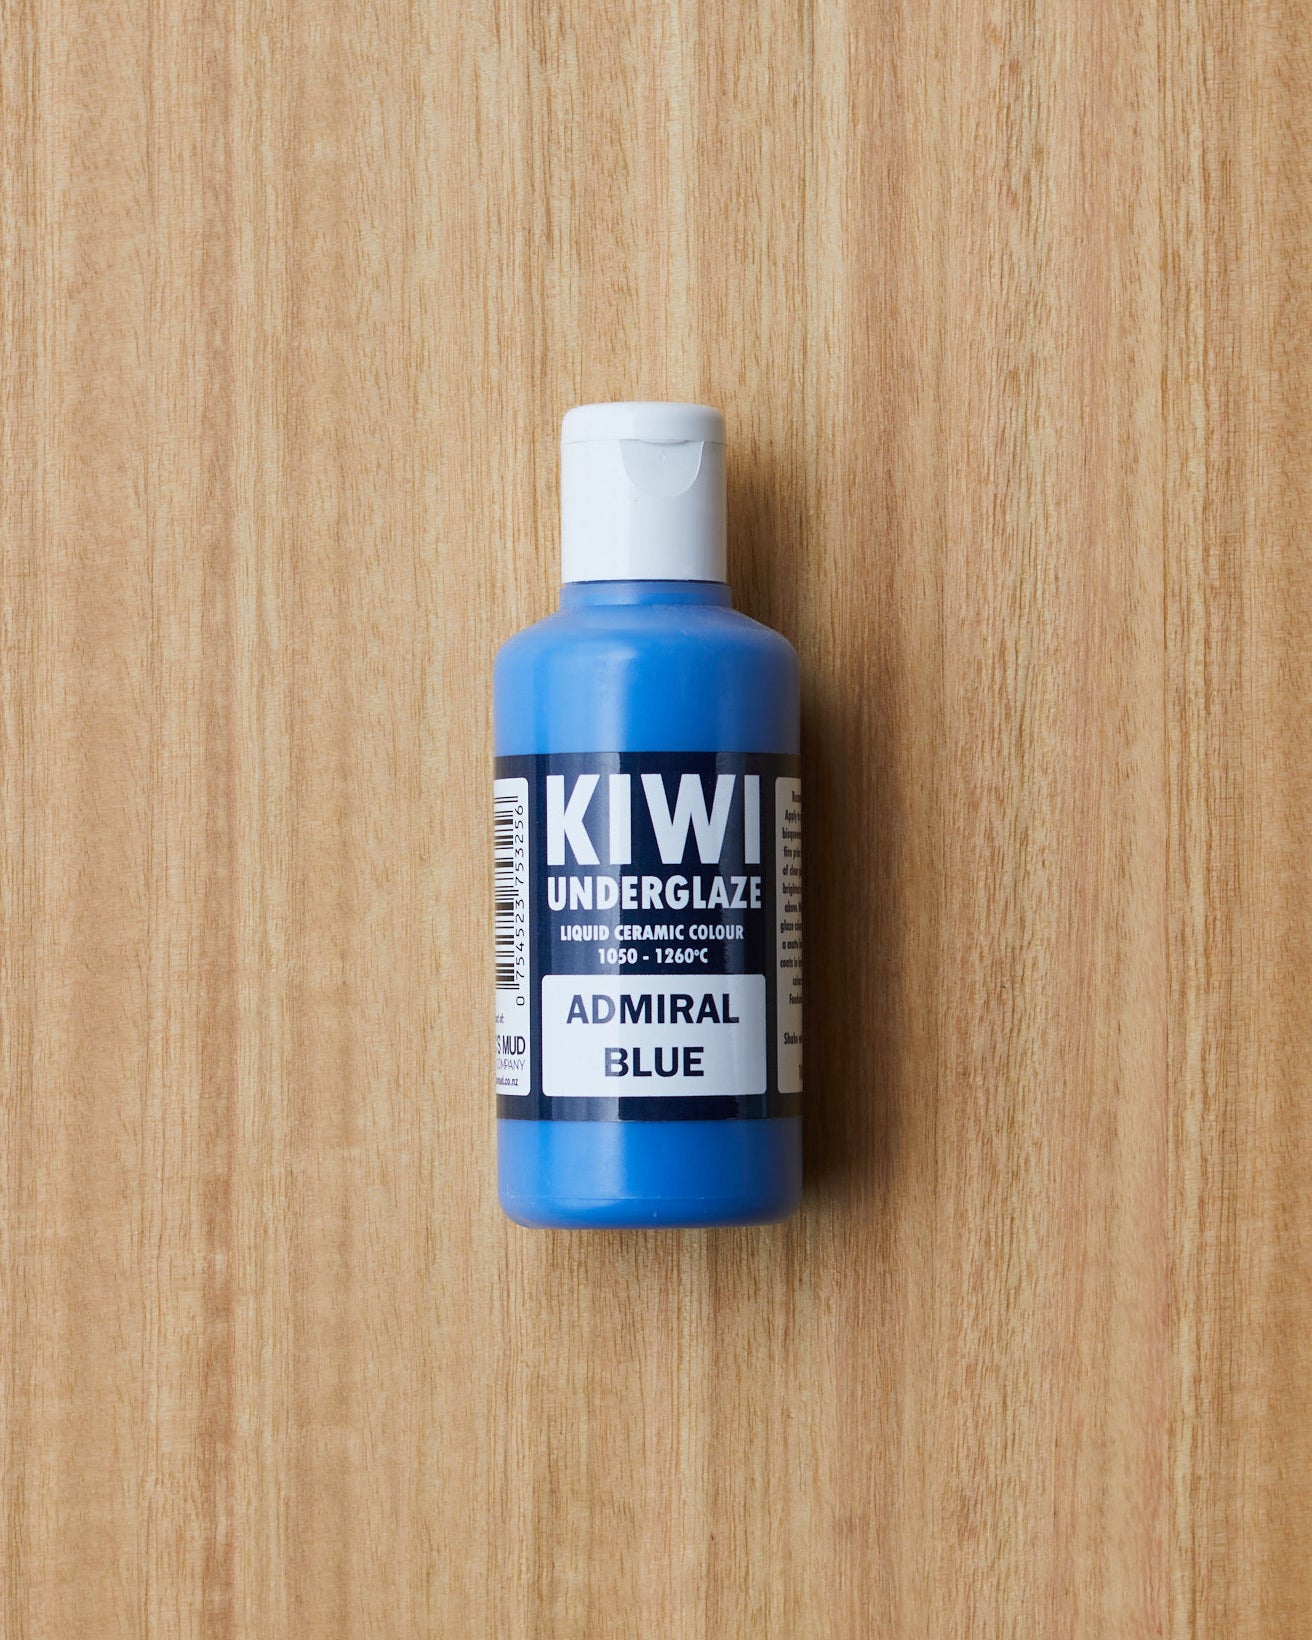 Kiwi Underglaze | Admiral Blue